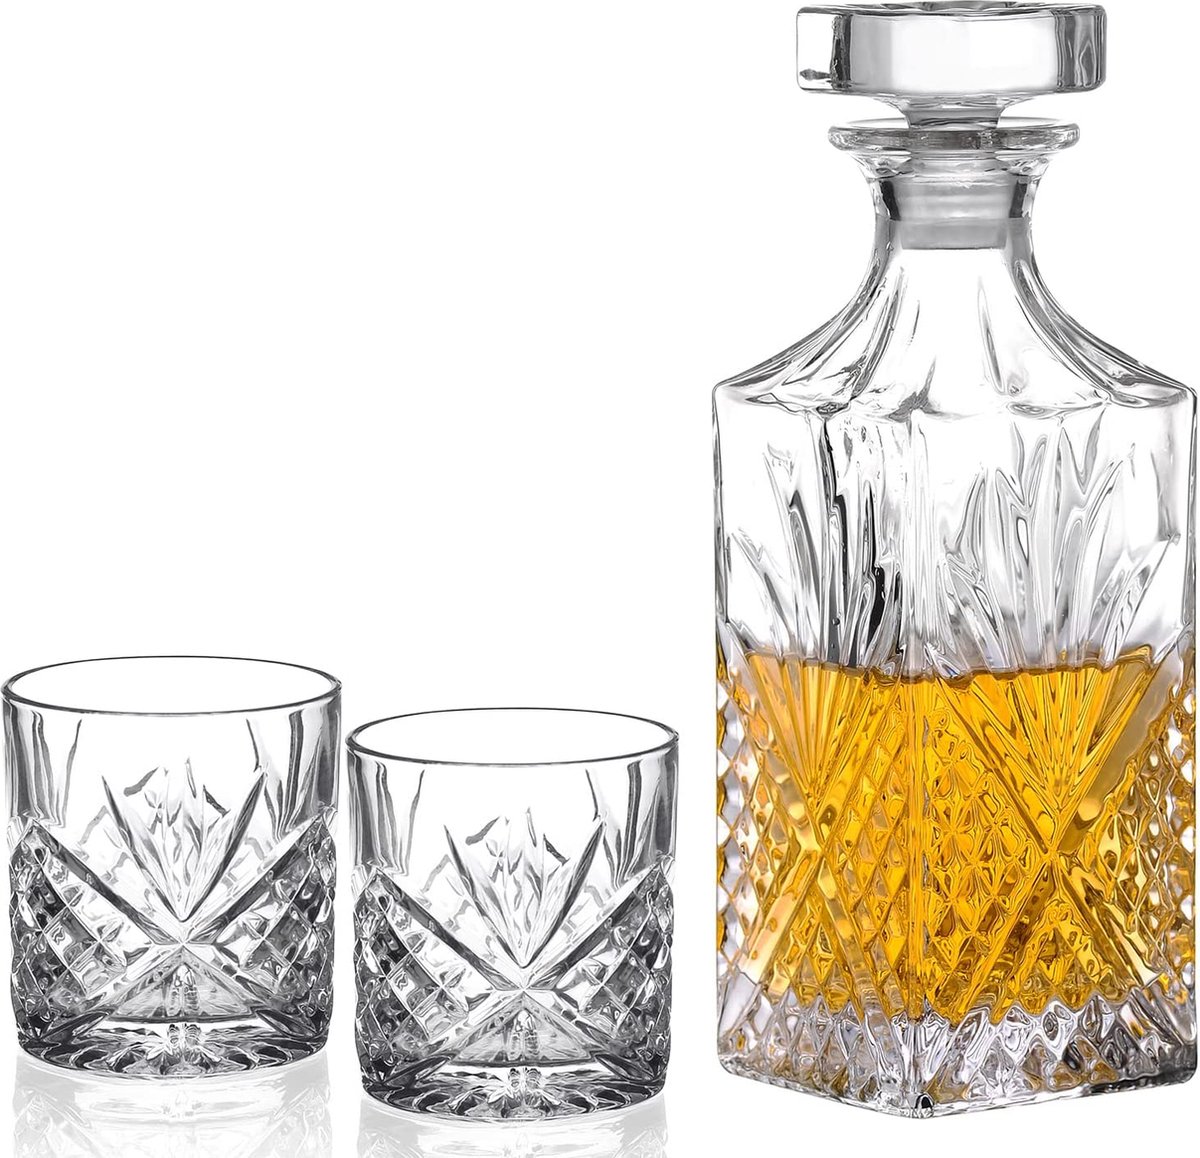 Amisglass Godinger Whisky karaf en glazen set - Dublin Crystal Collection voor Liquor Whisky Vodka of wijn - Set van 3